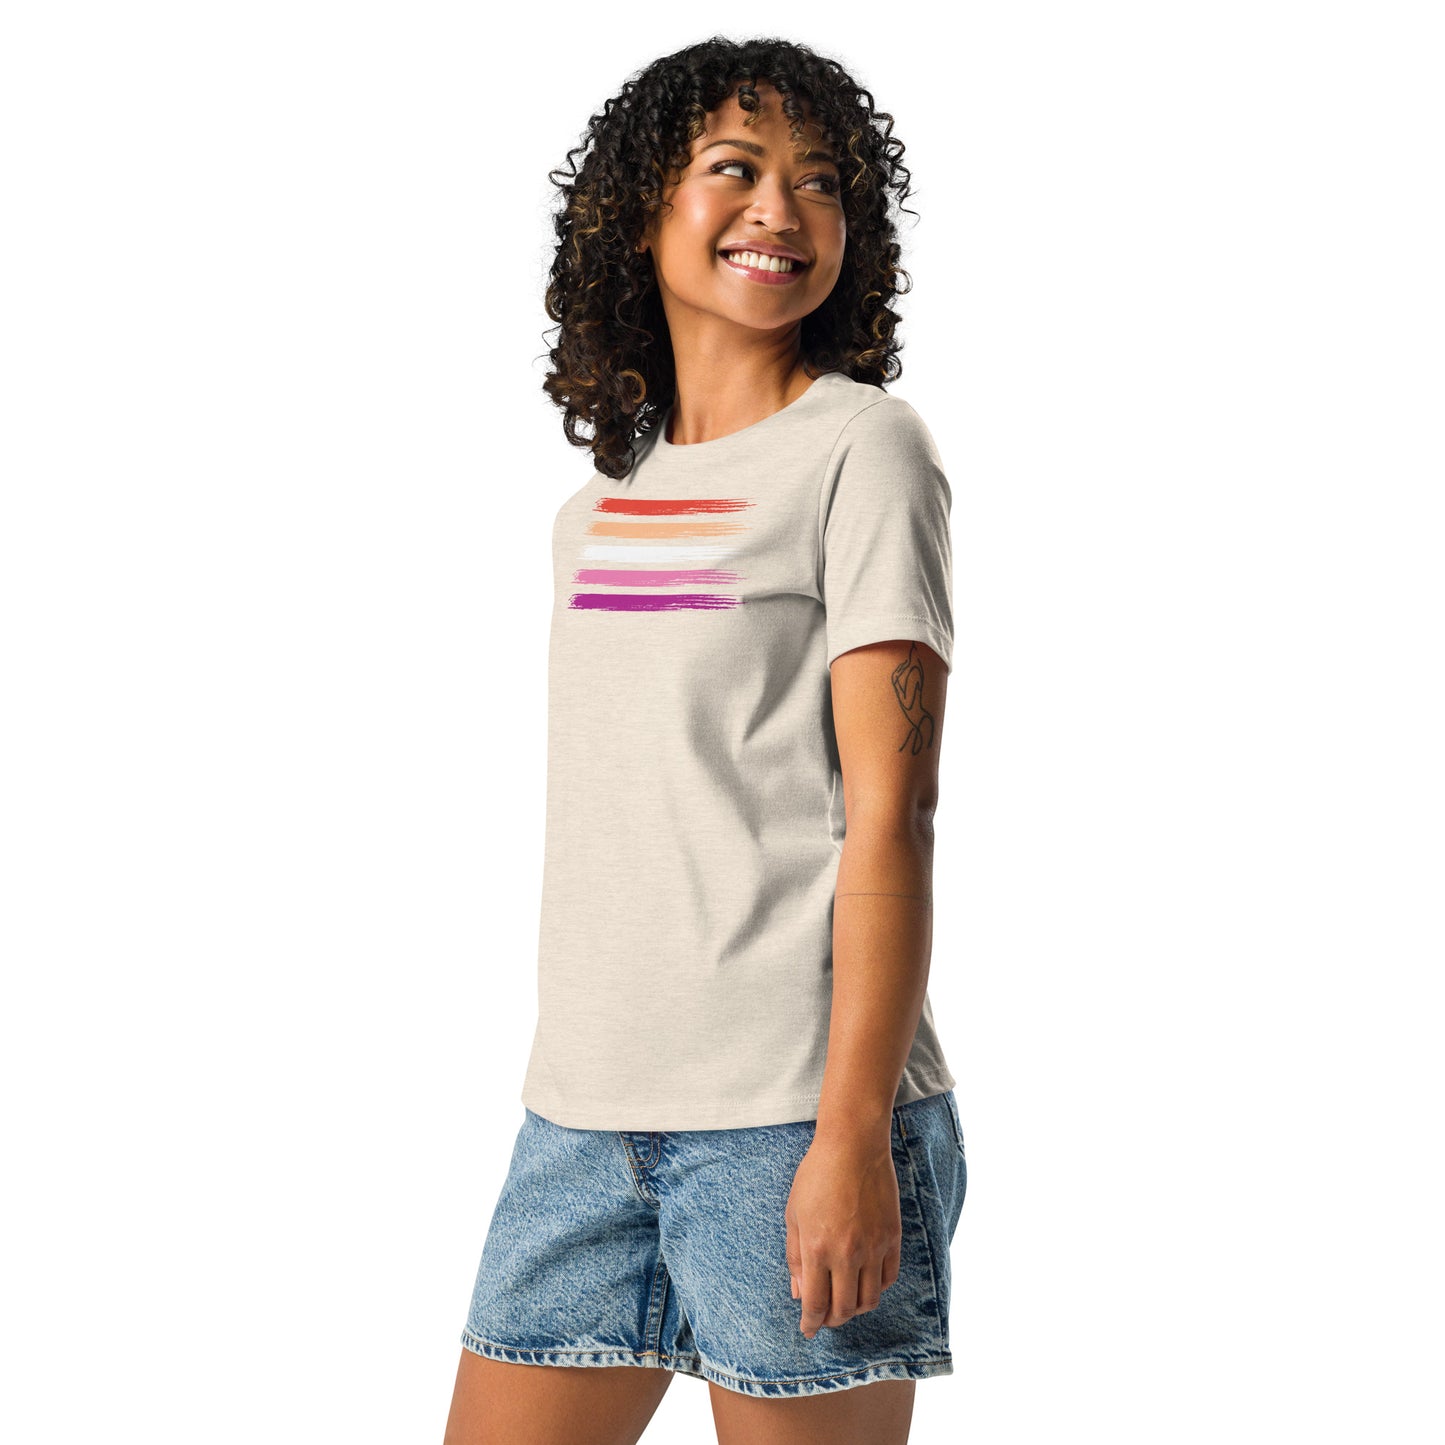 Lesbian Pride Flag relaxed t-shirt (women's sizes)